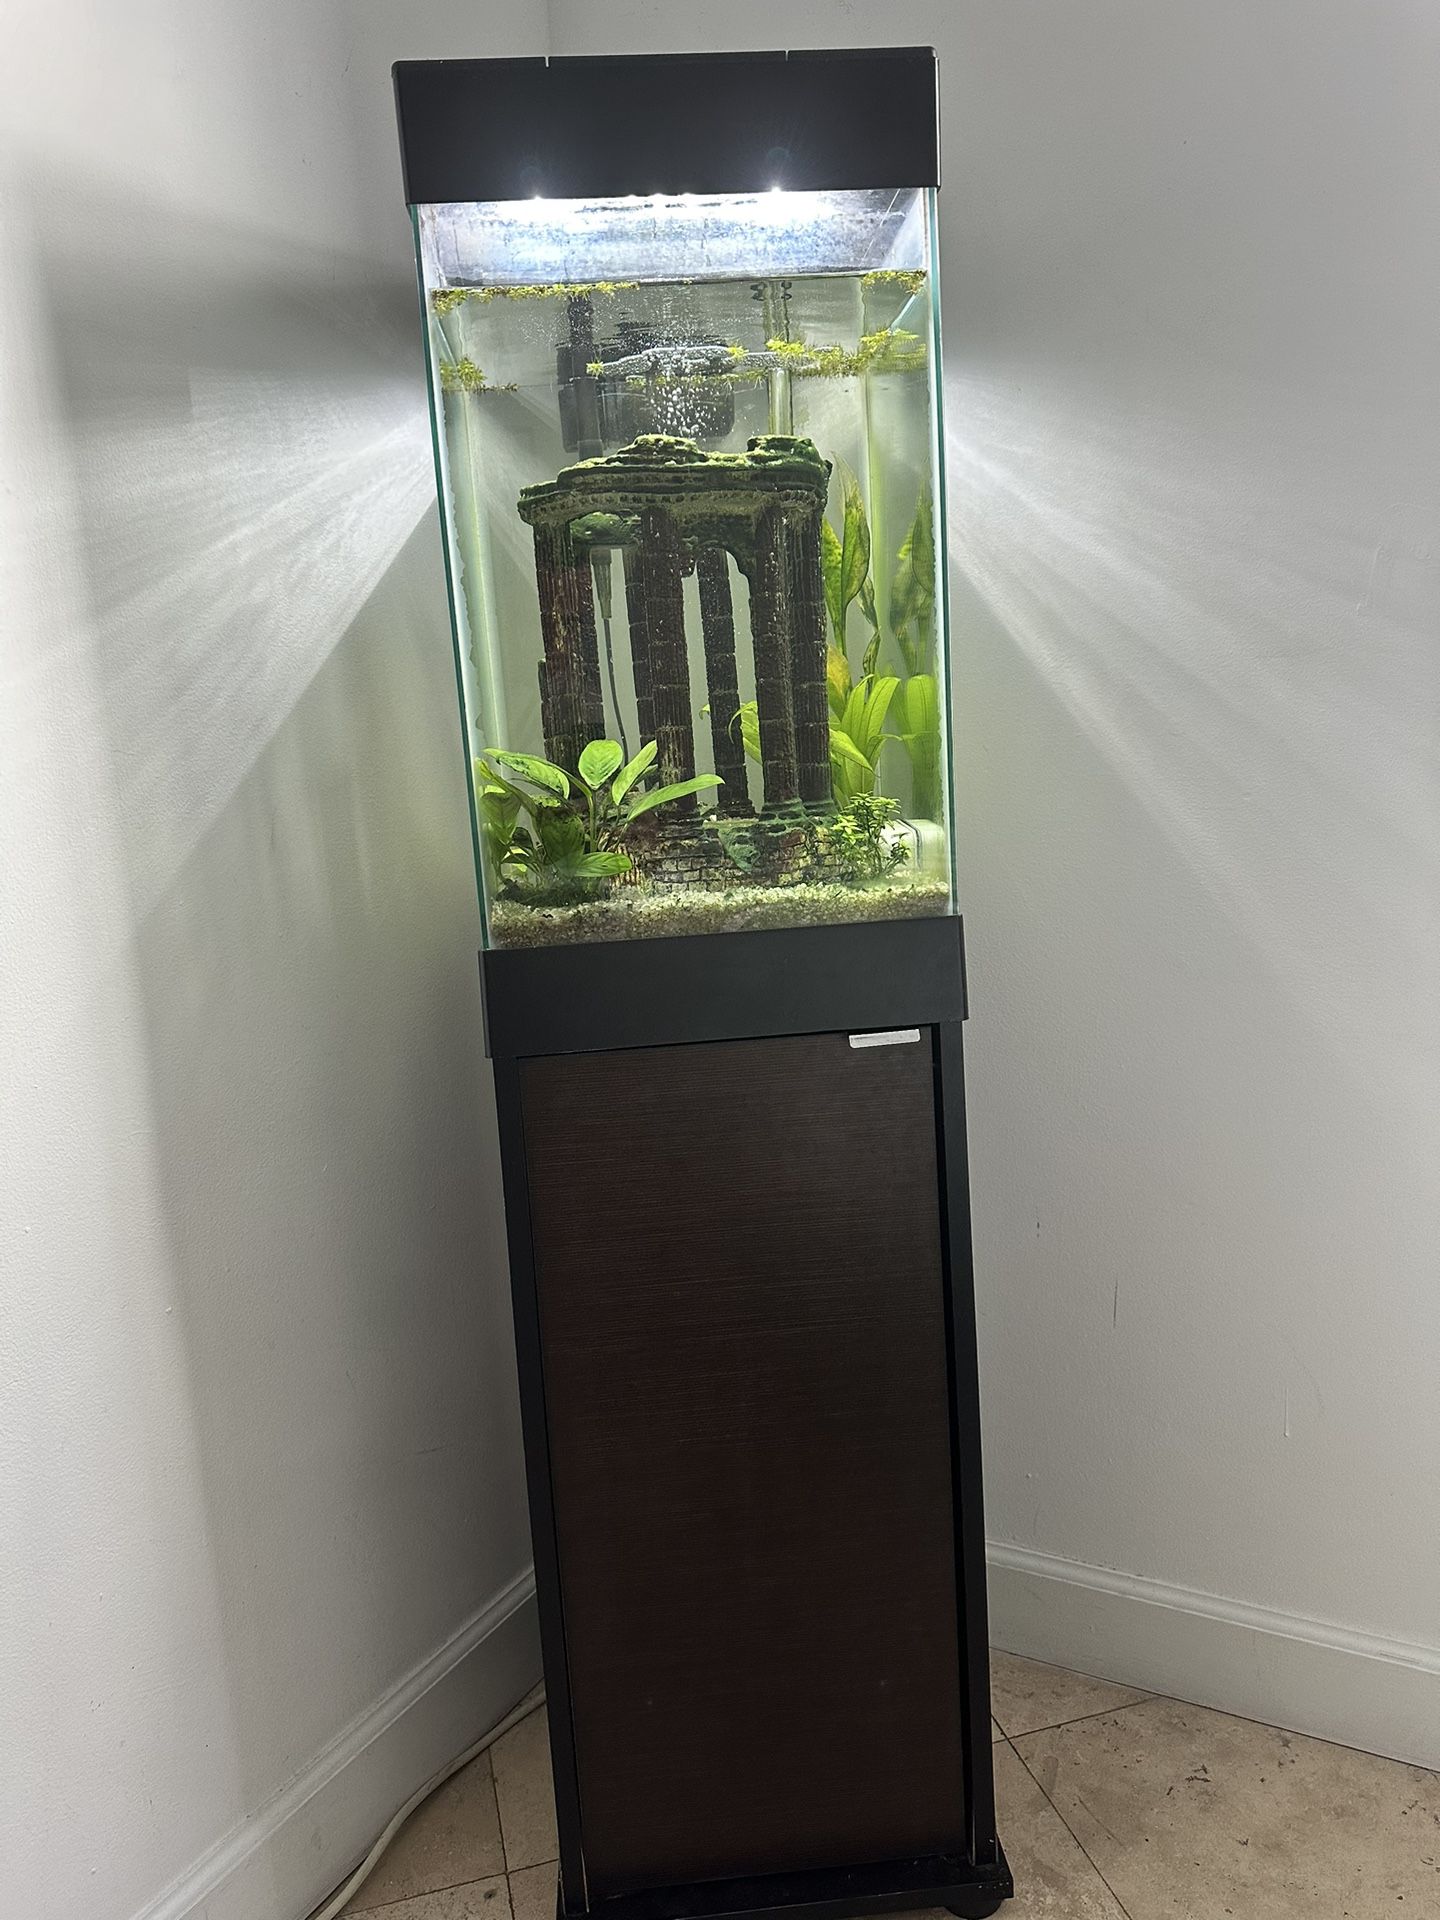 Full Aquarium- Fish Tank Set Up